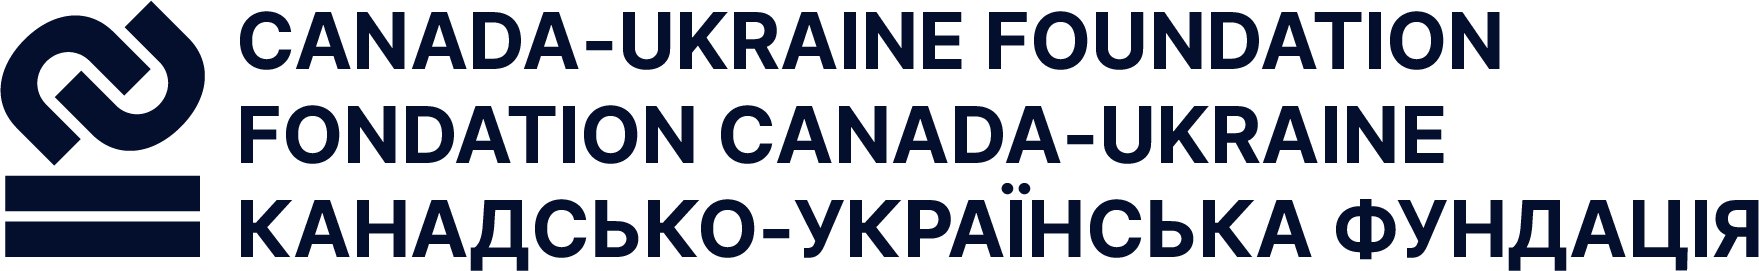 Canada Ukraine Foundation - Summer camps for displaced children